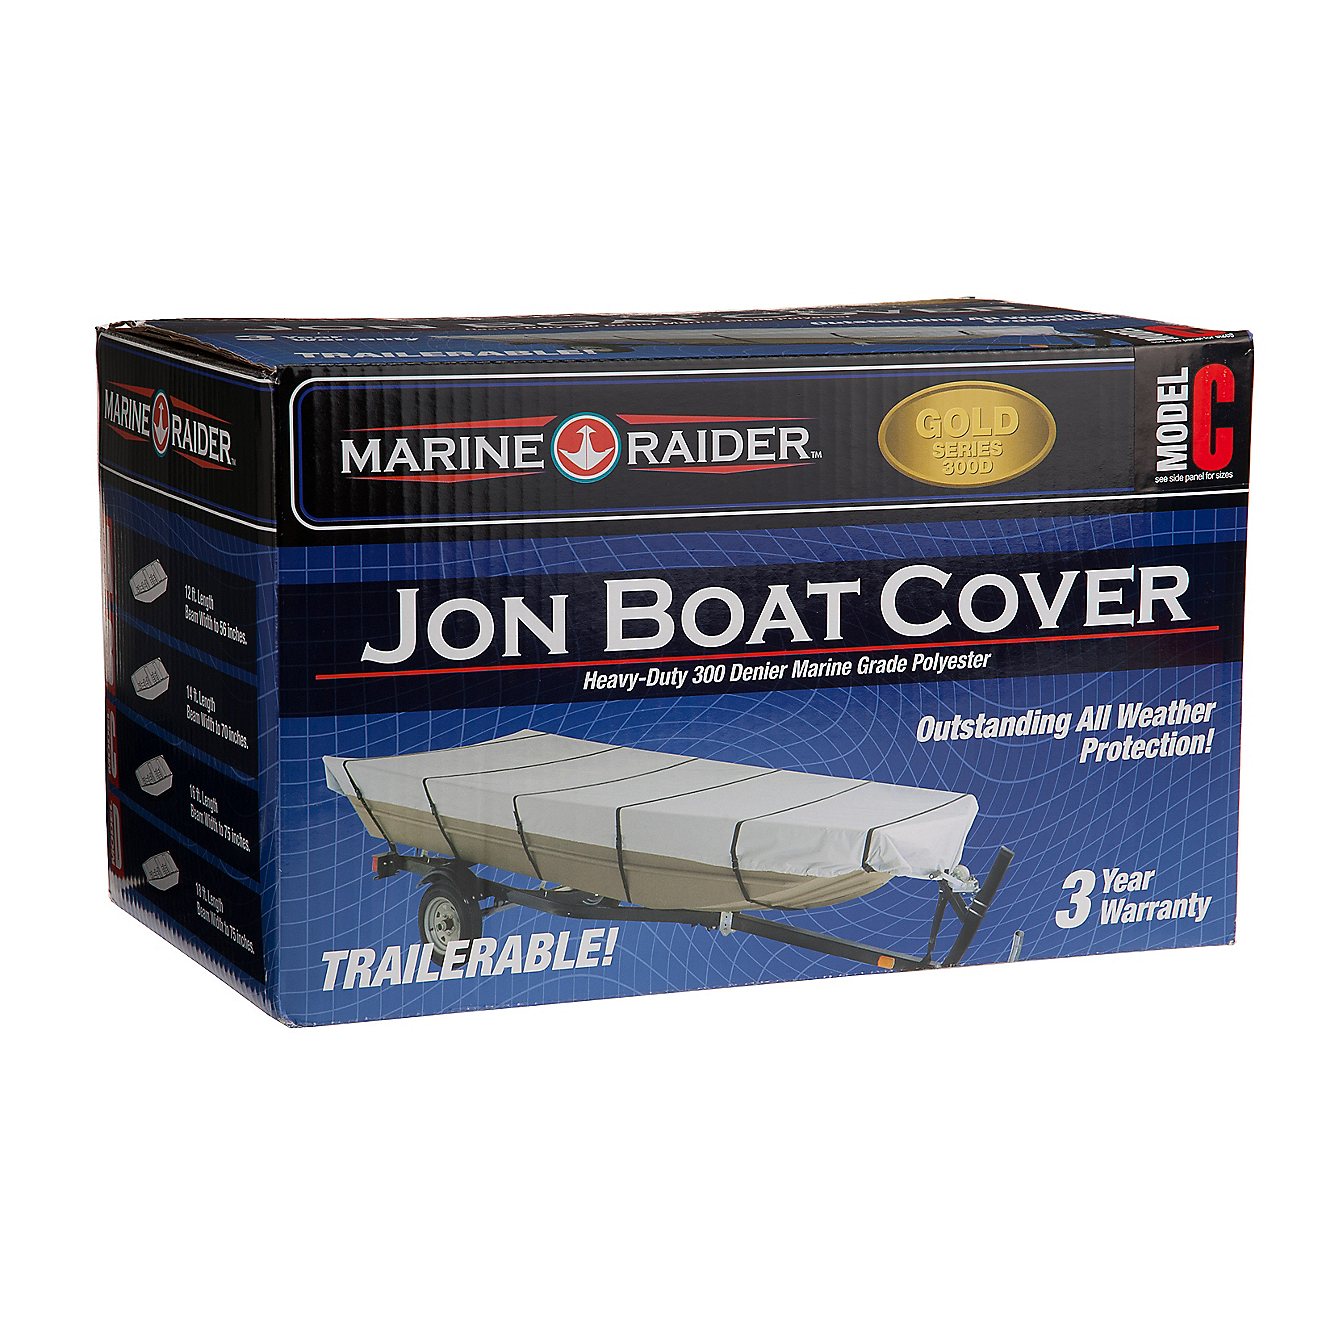 Marine Raider Model C 300-Denier Boat Cover Fits 16' Jon Boats                                                                   - view number 1